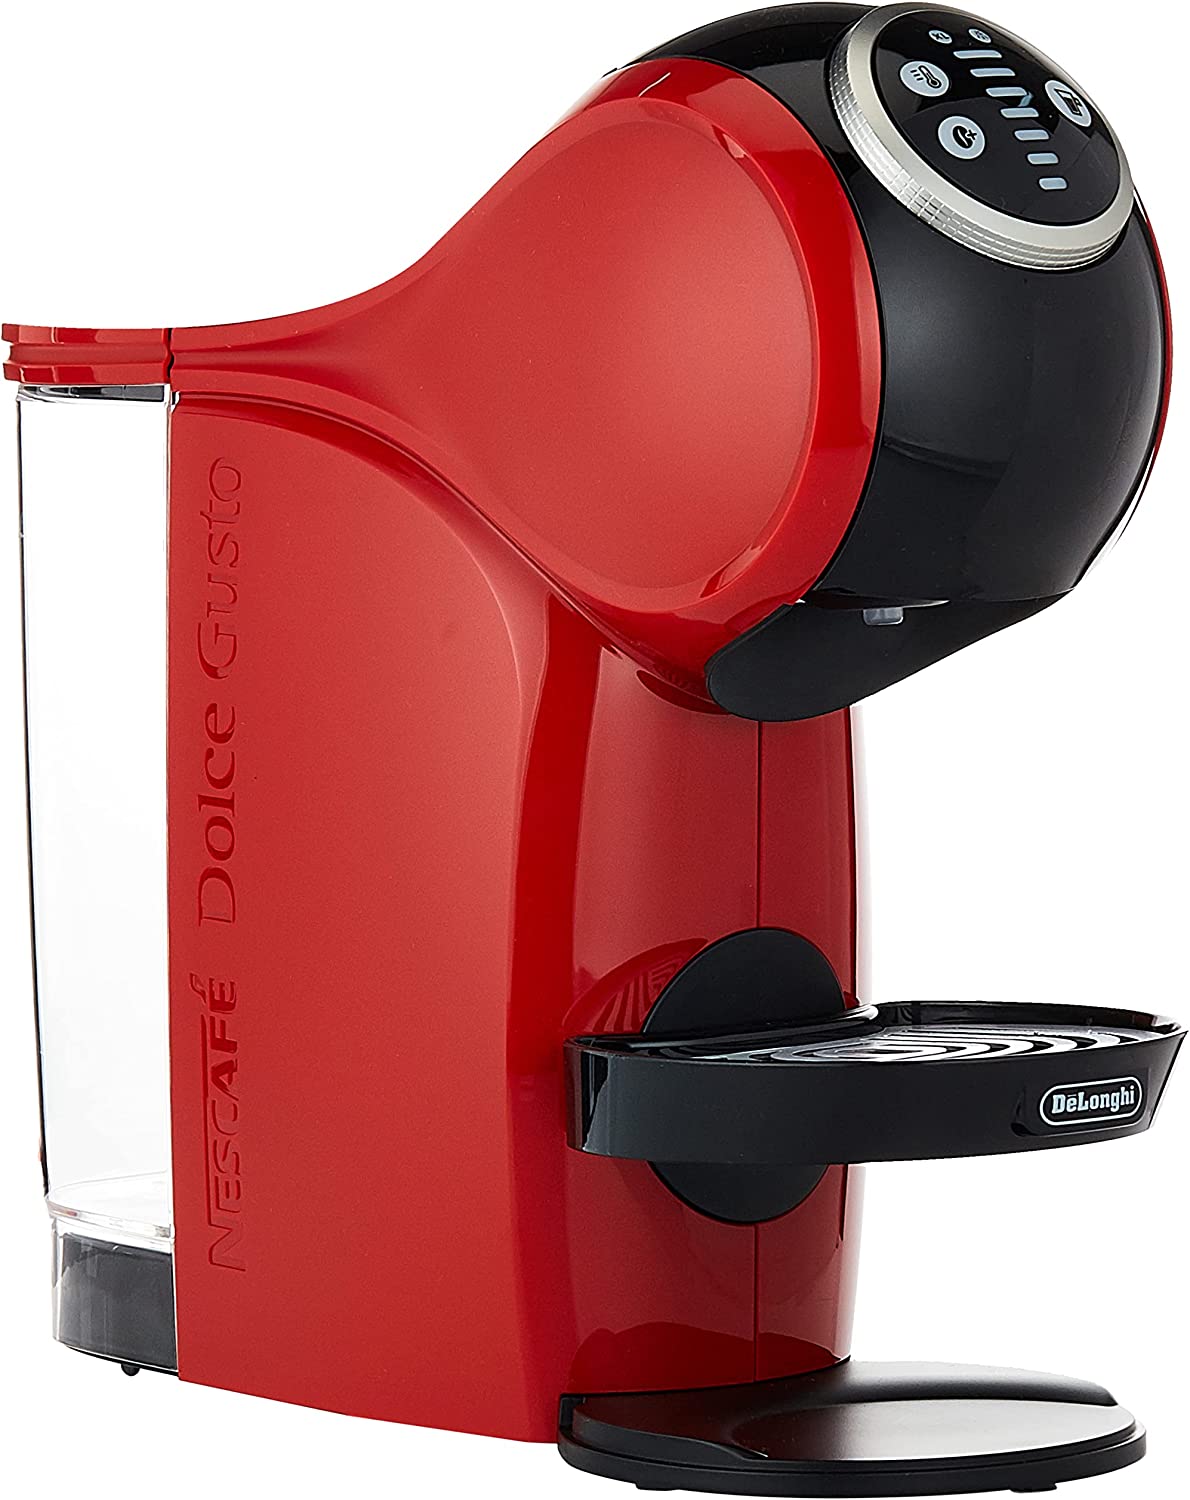 Nescafe EDG315.R  | Coffee Machine